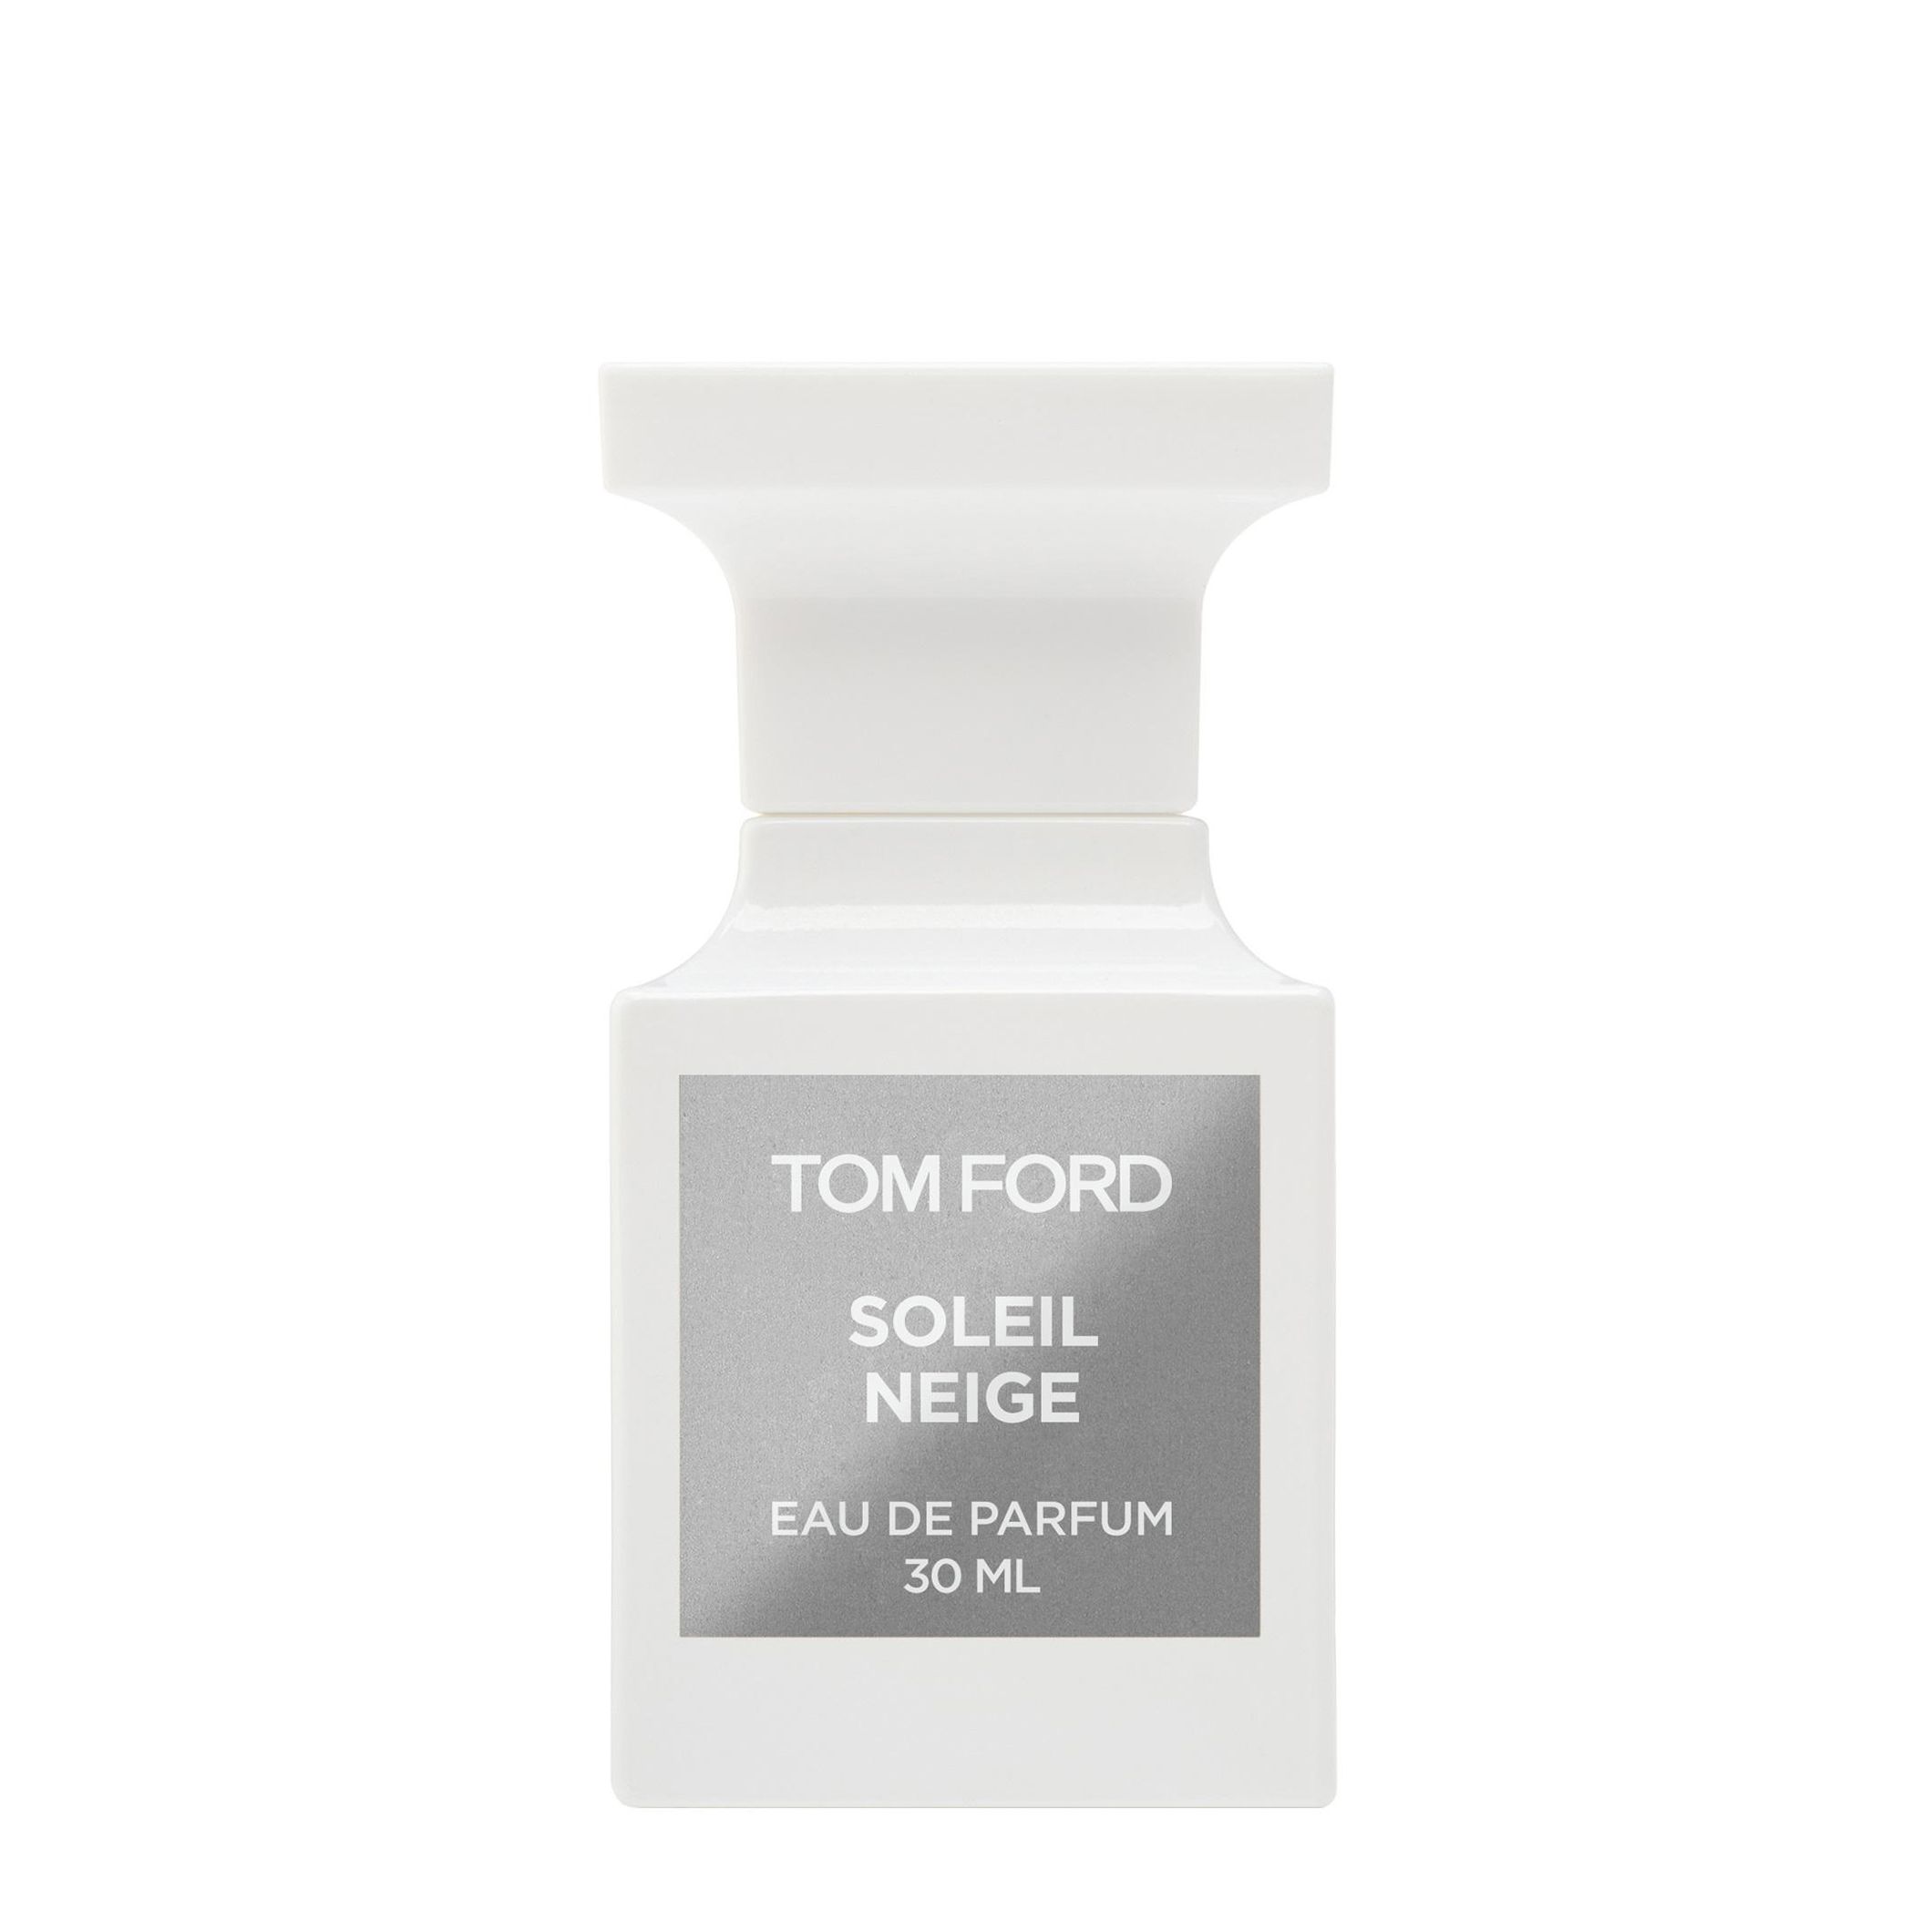 Вода парфюмерная Tom Ford Soleil Neige, унисекс, 30 мл soleil neige